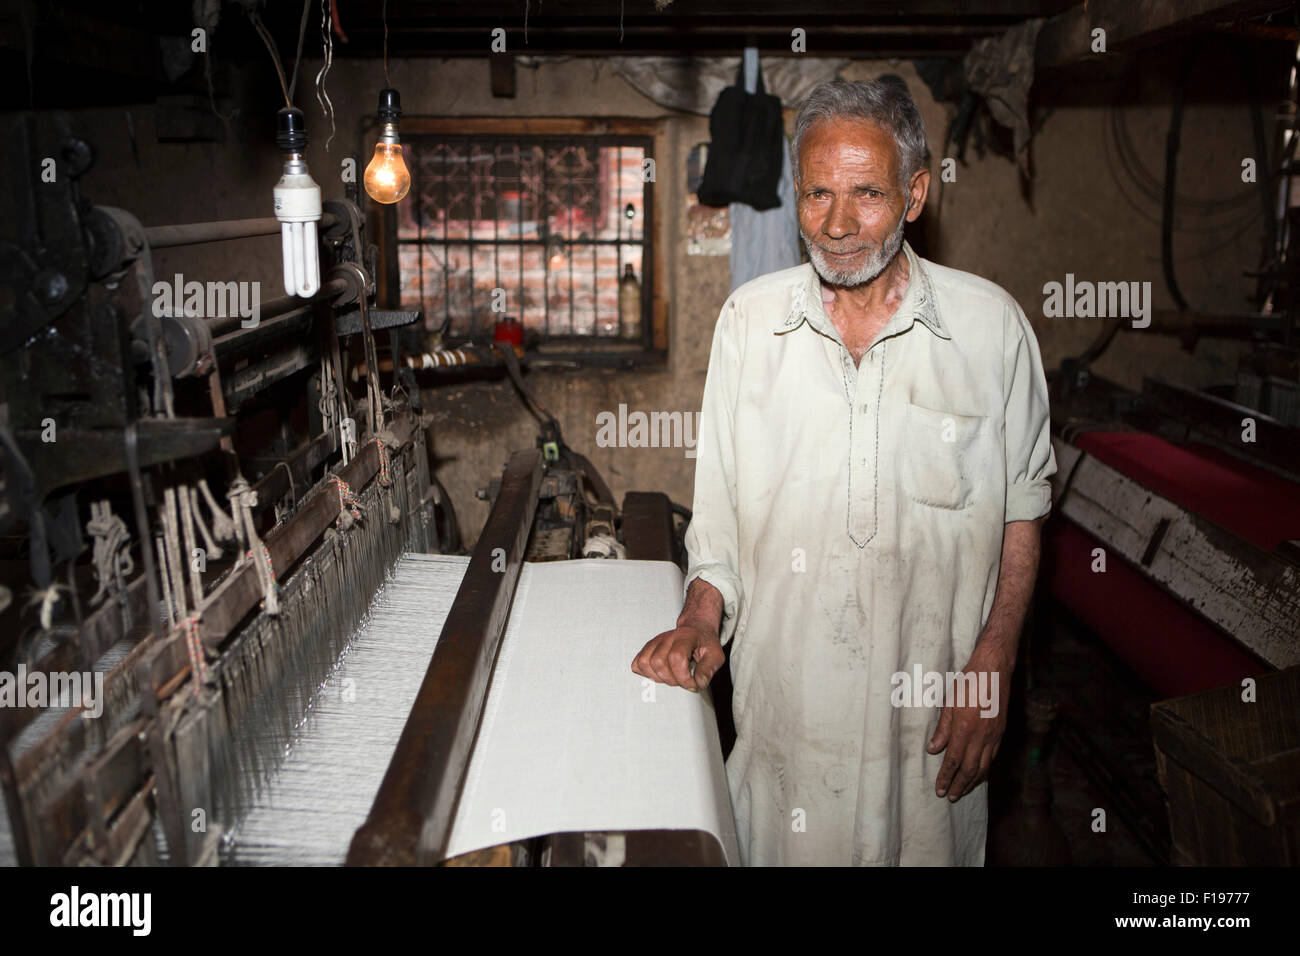 India, Jammu & Kashmir, Srinagar, pashmina production, man weaving pasminas on mechanical loom in dark workshop Stock Photo